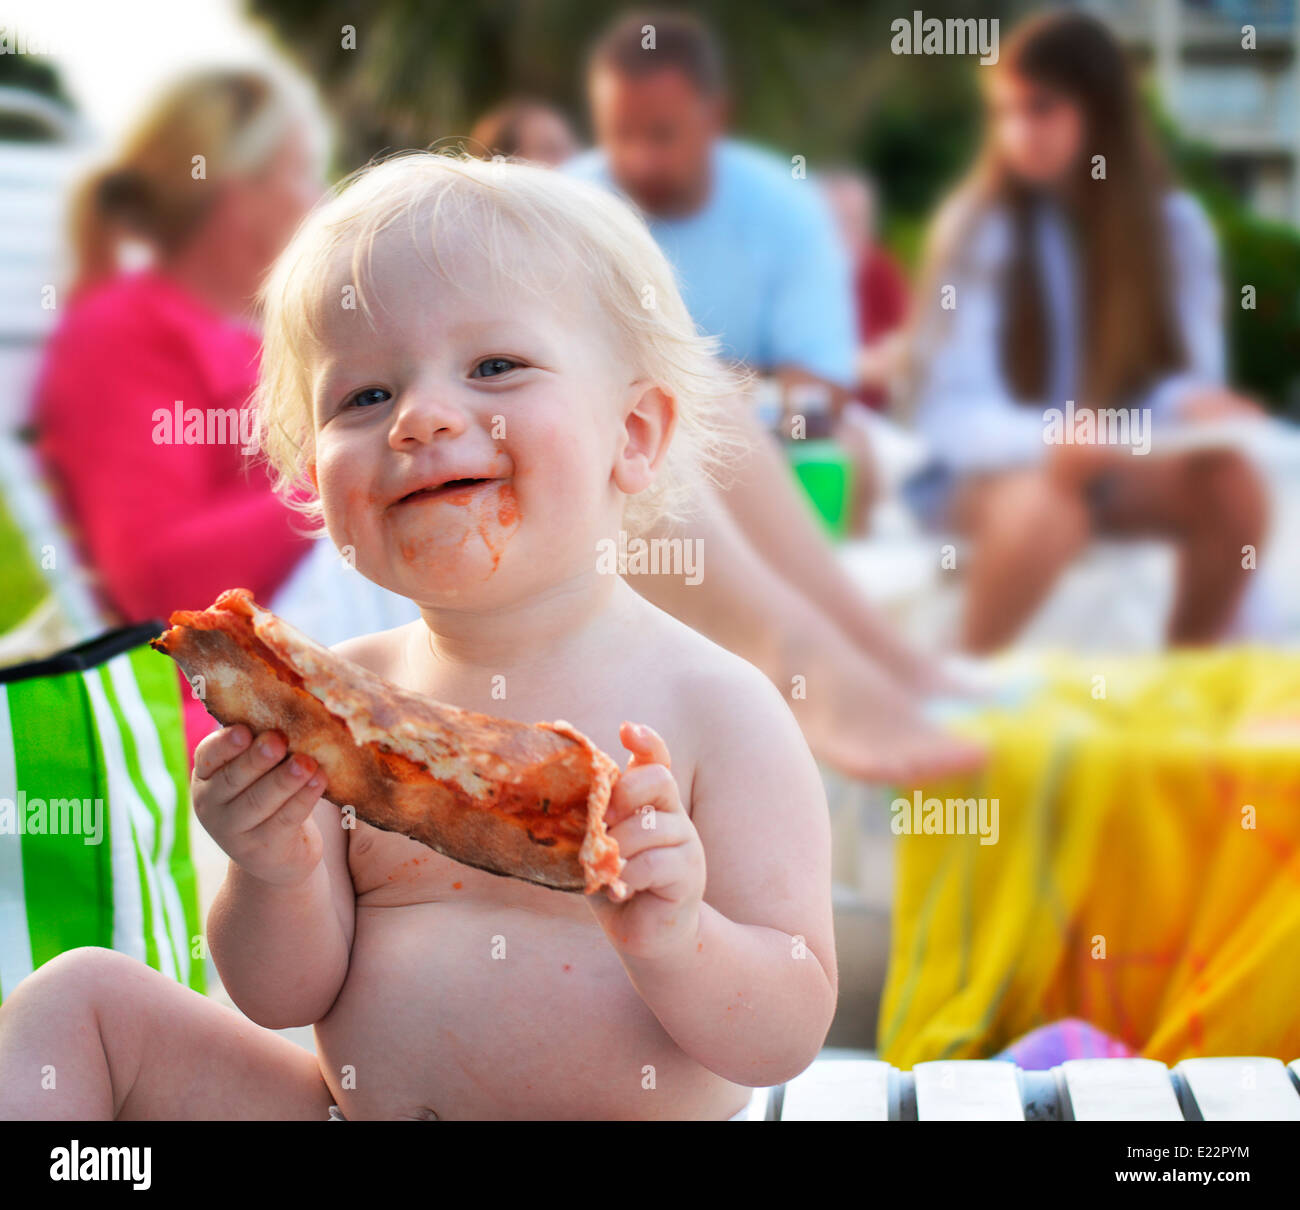 Happy baby eating Stock Photo